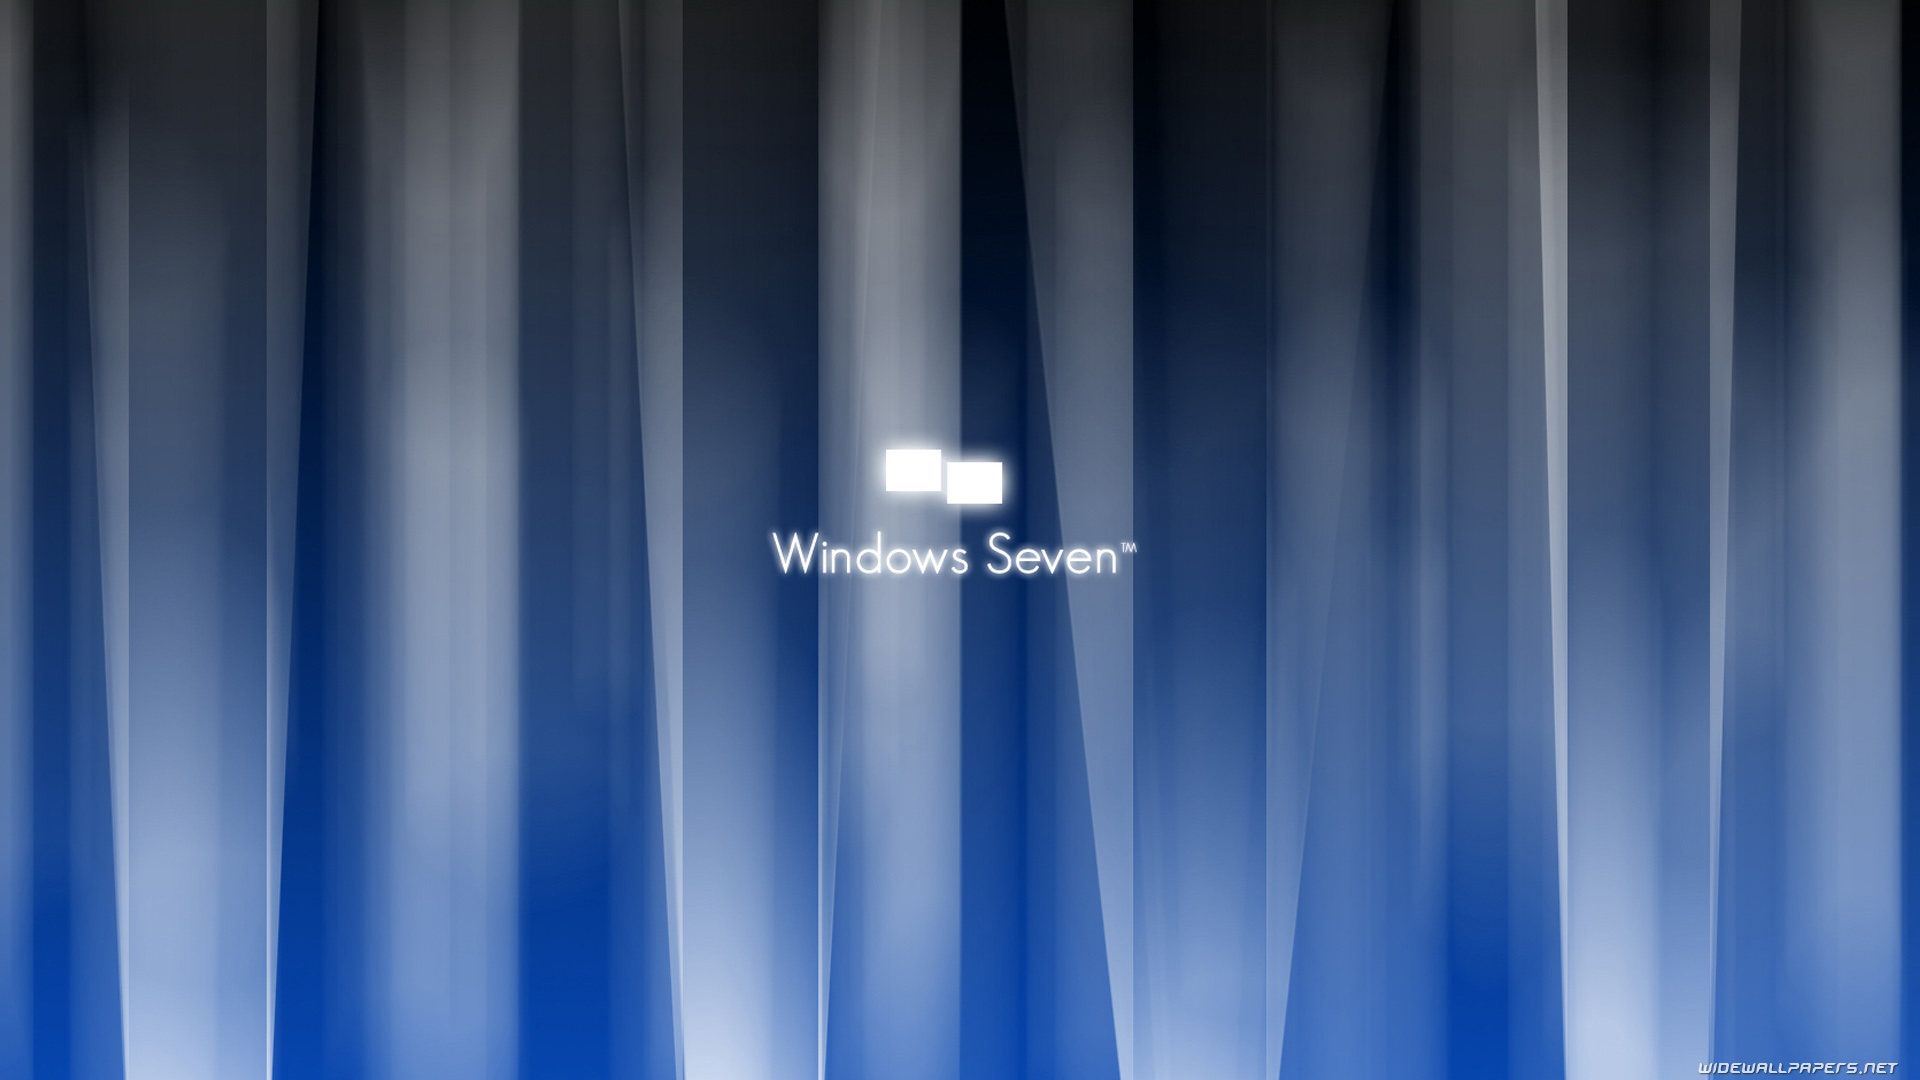 Windows 7 PC Wallpapers HD 1920x1080 - Wallpaper Cave